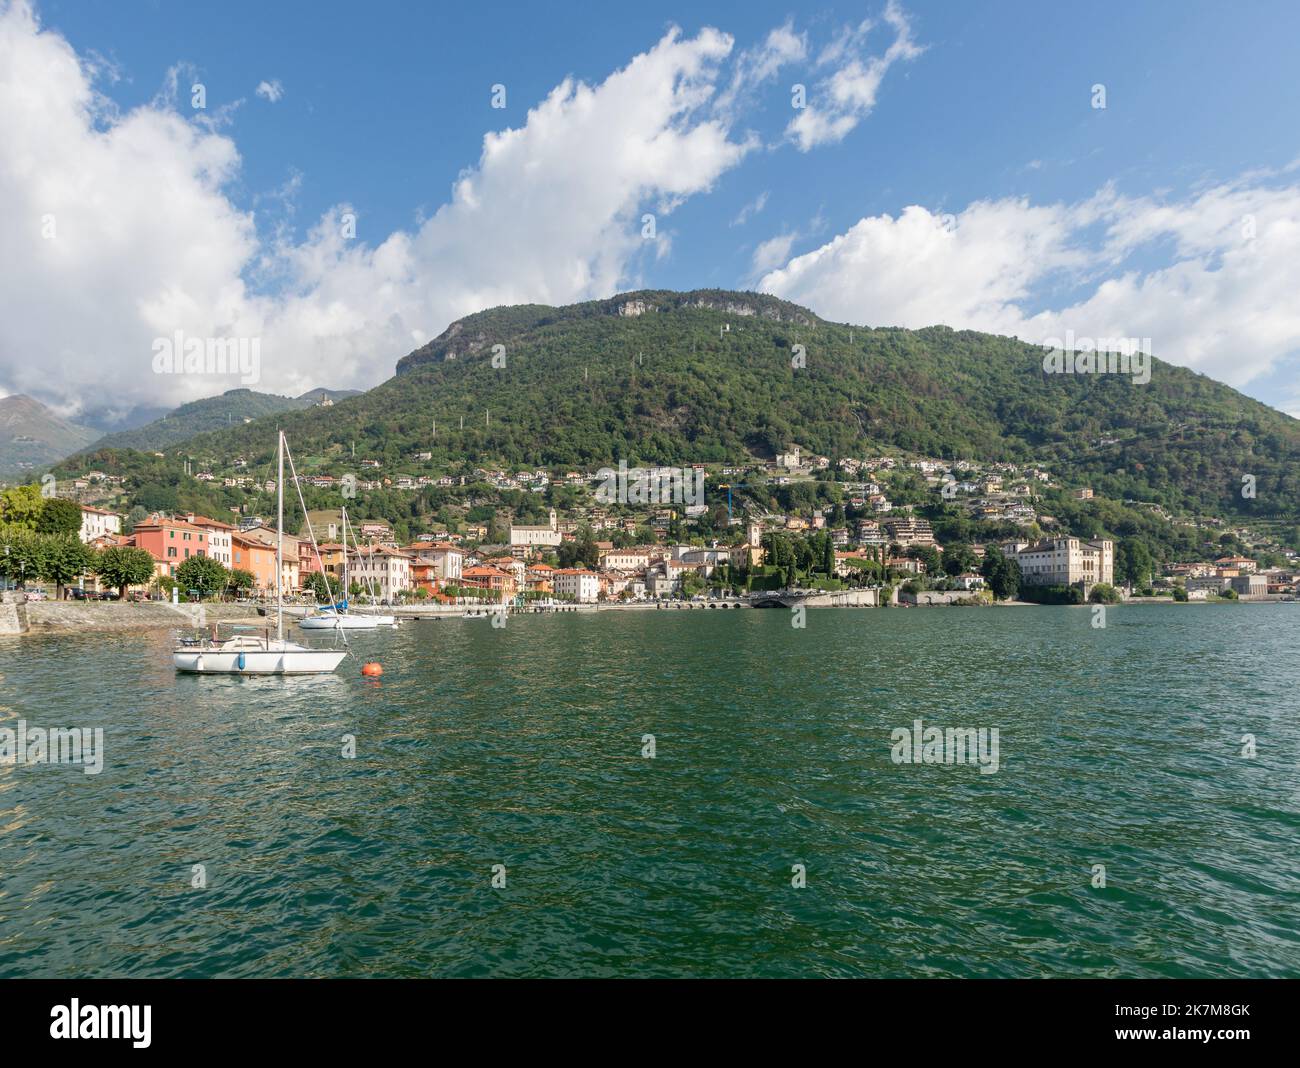 Town of Gravedona ed Uniti on Lake Como, waterfront with Palazzo Gallio, sail boats in foreground Stock Photo